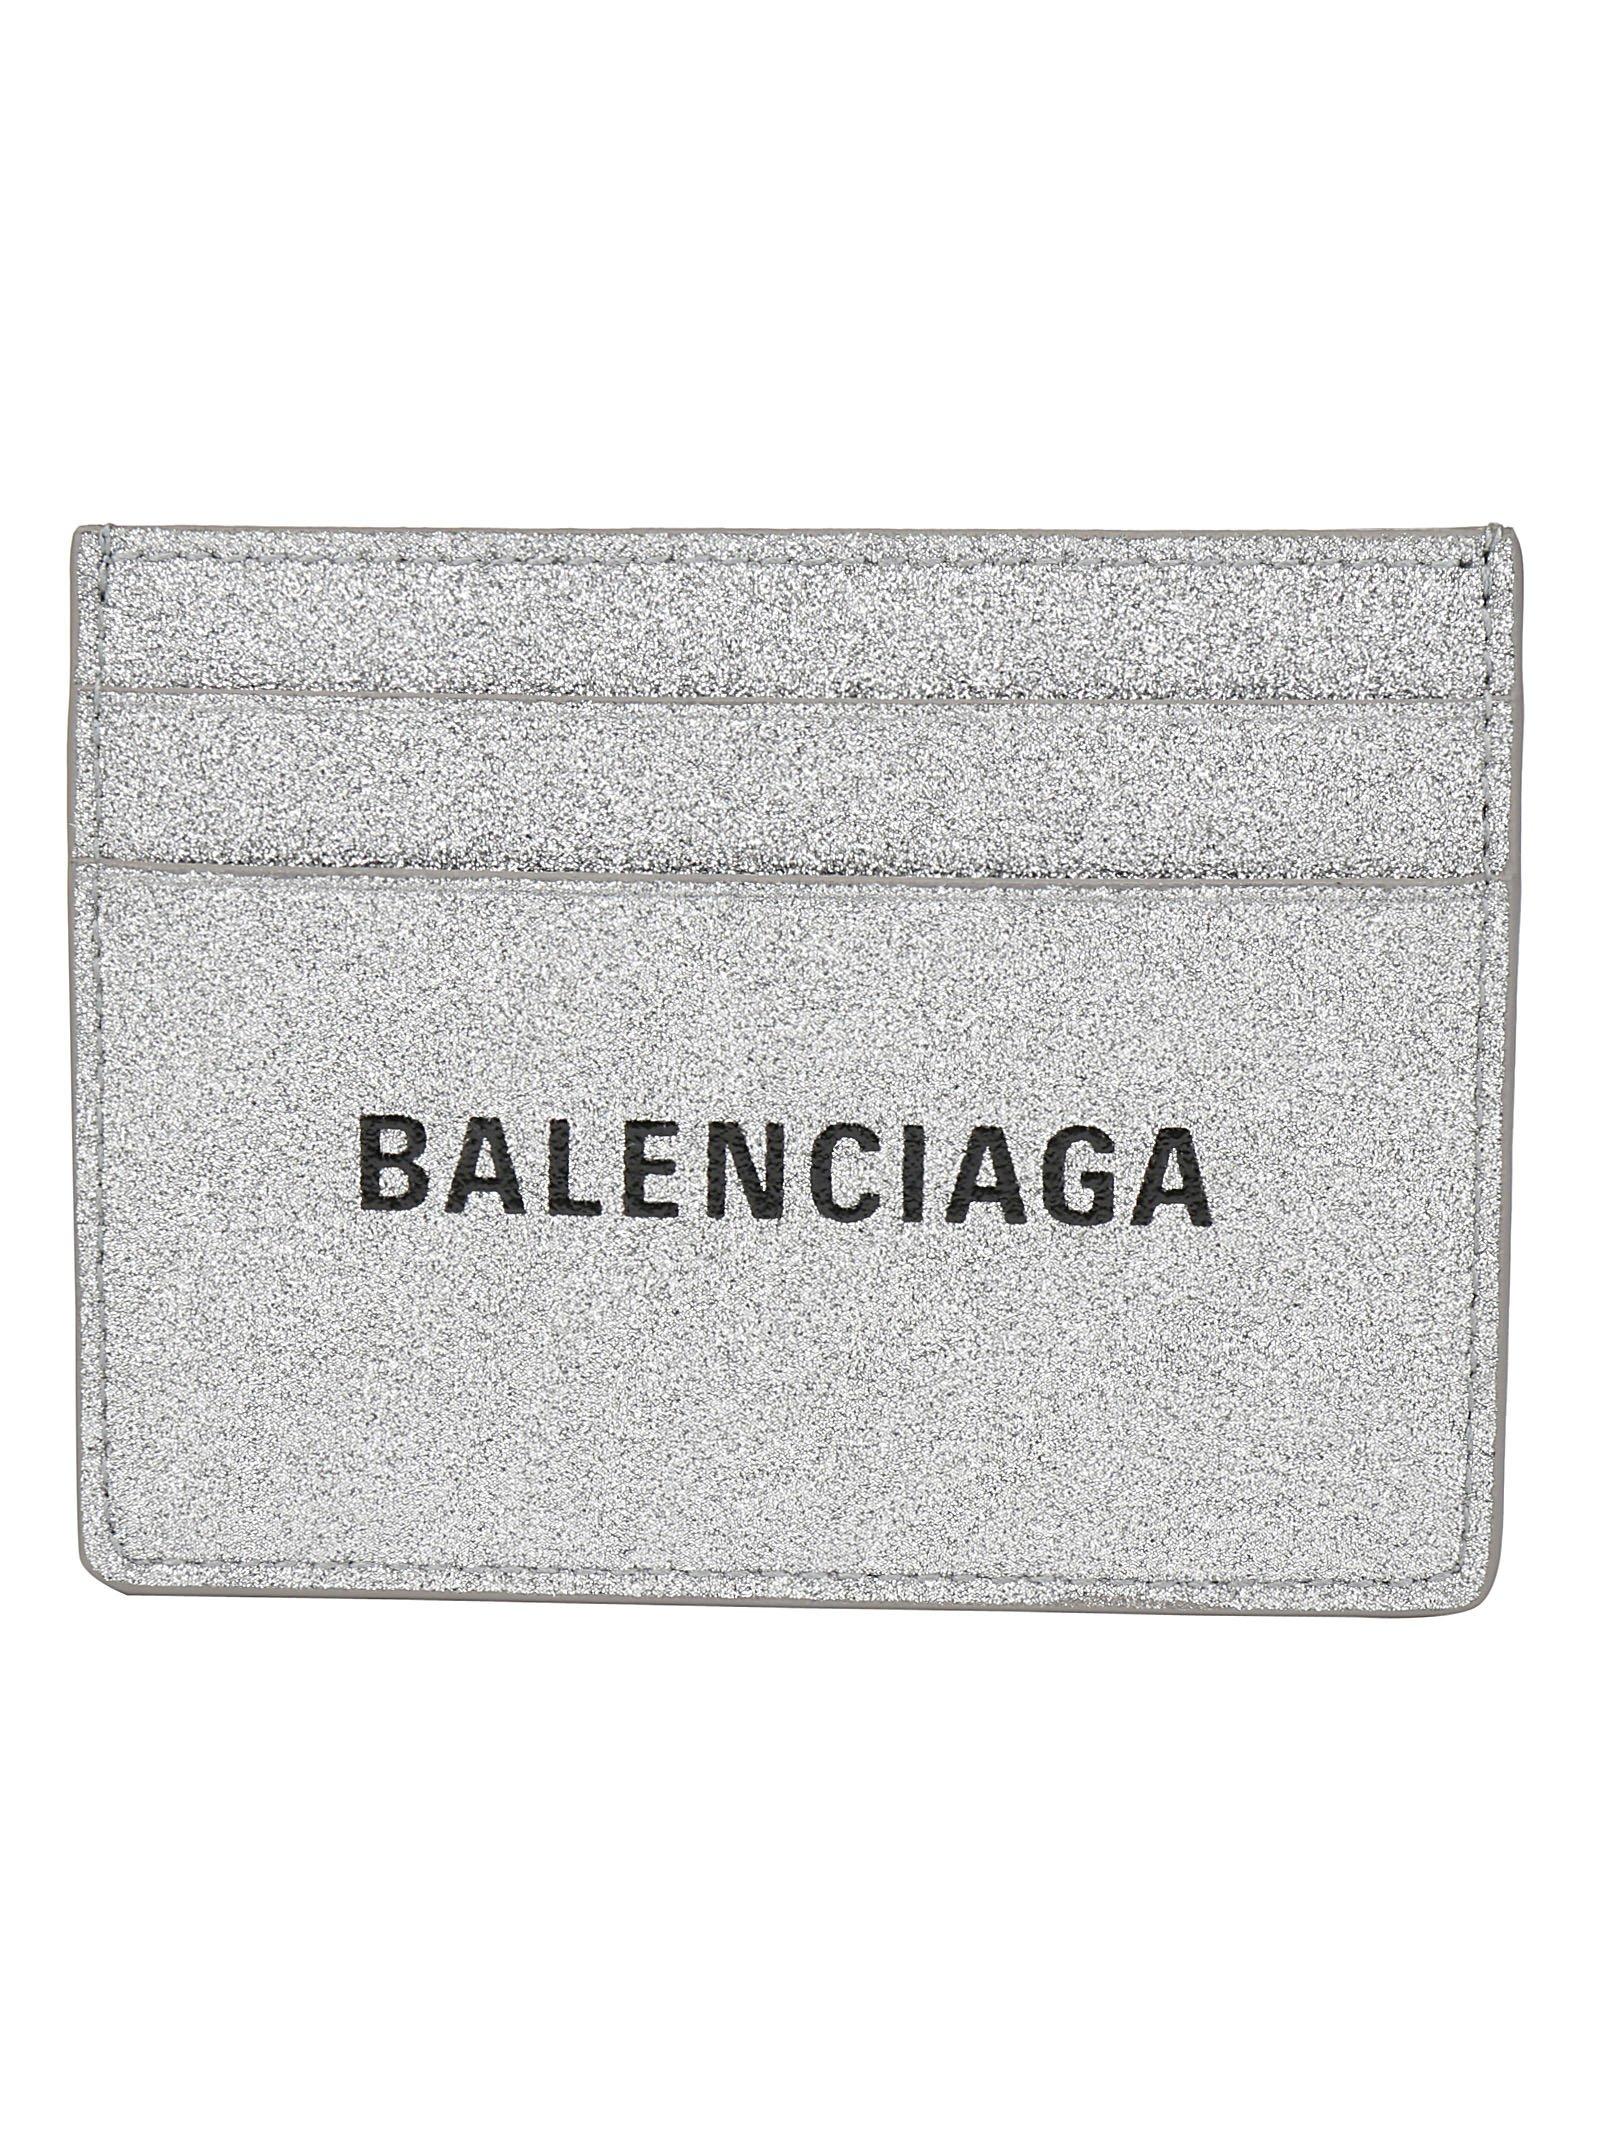 Card Holder Balenciaga, Buy Now, Outlet, 55% OFF, www.acananortheast.com